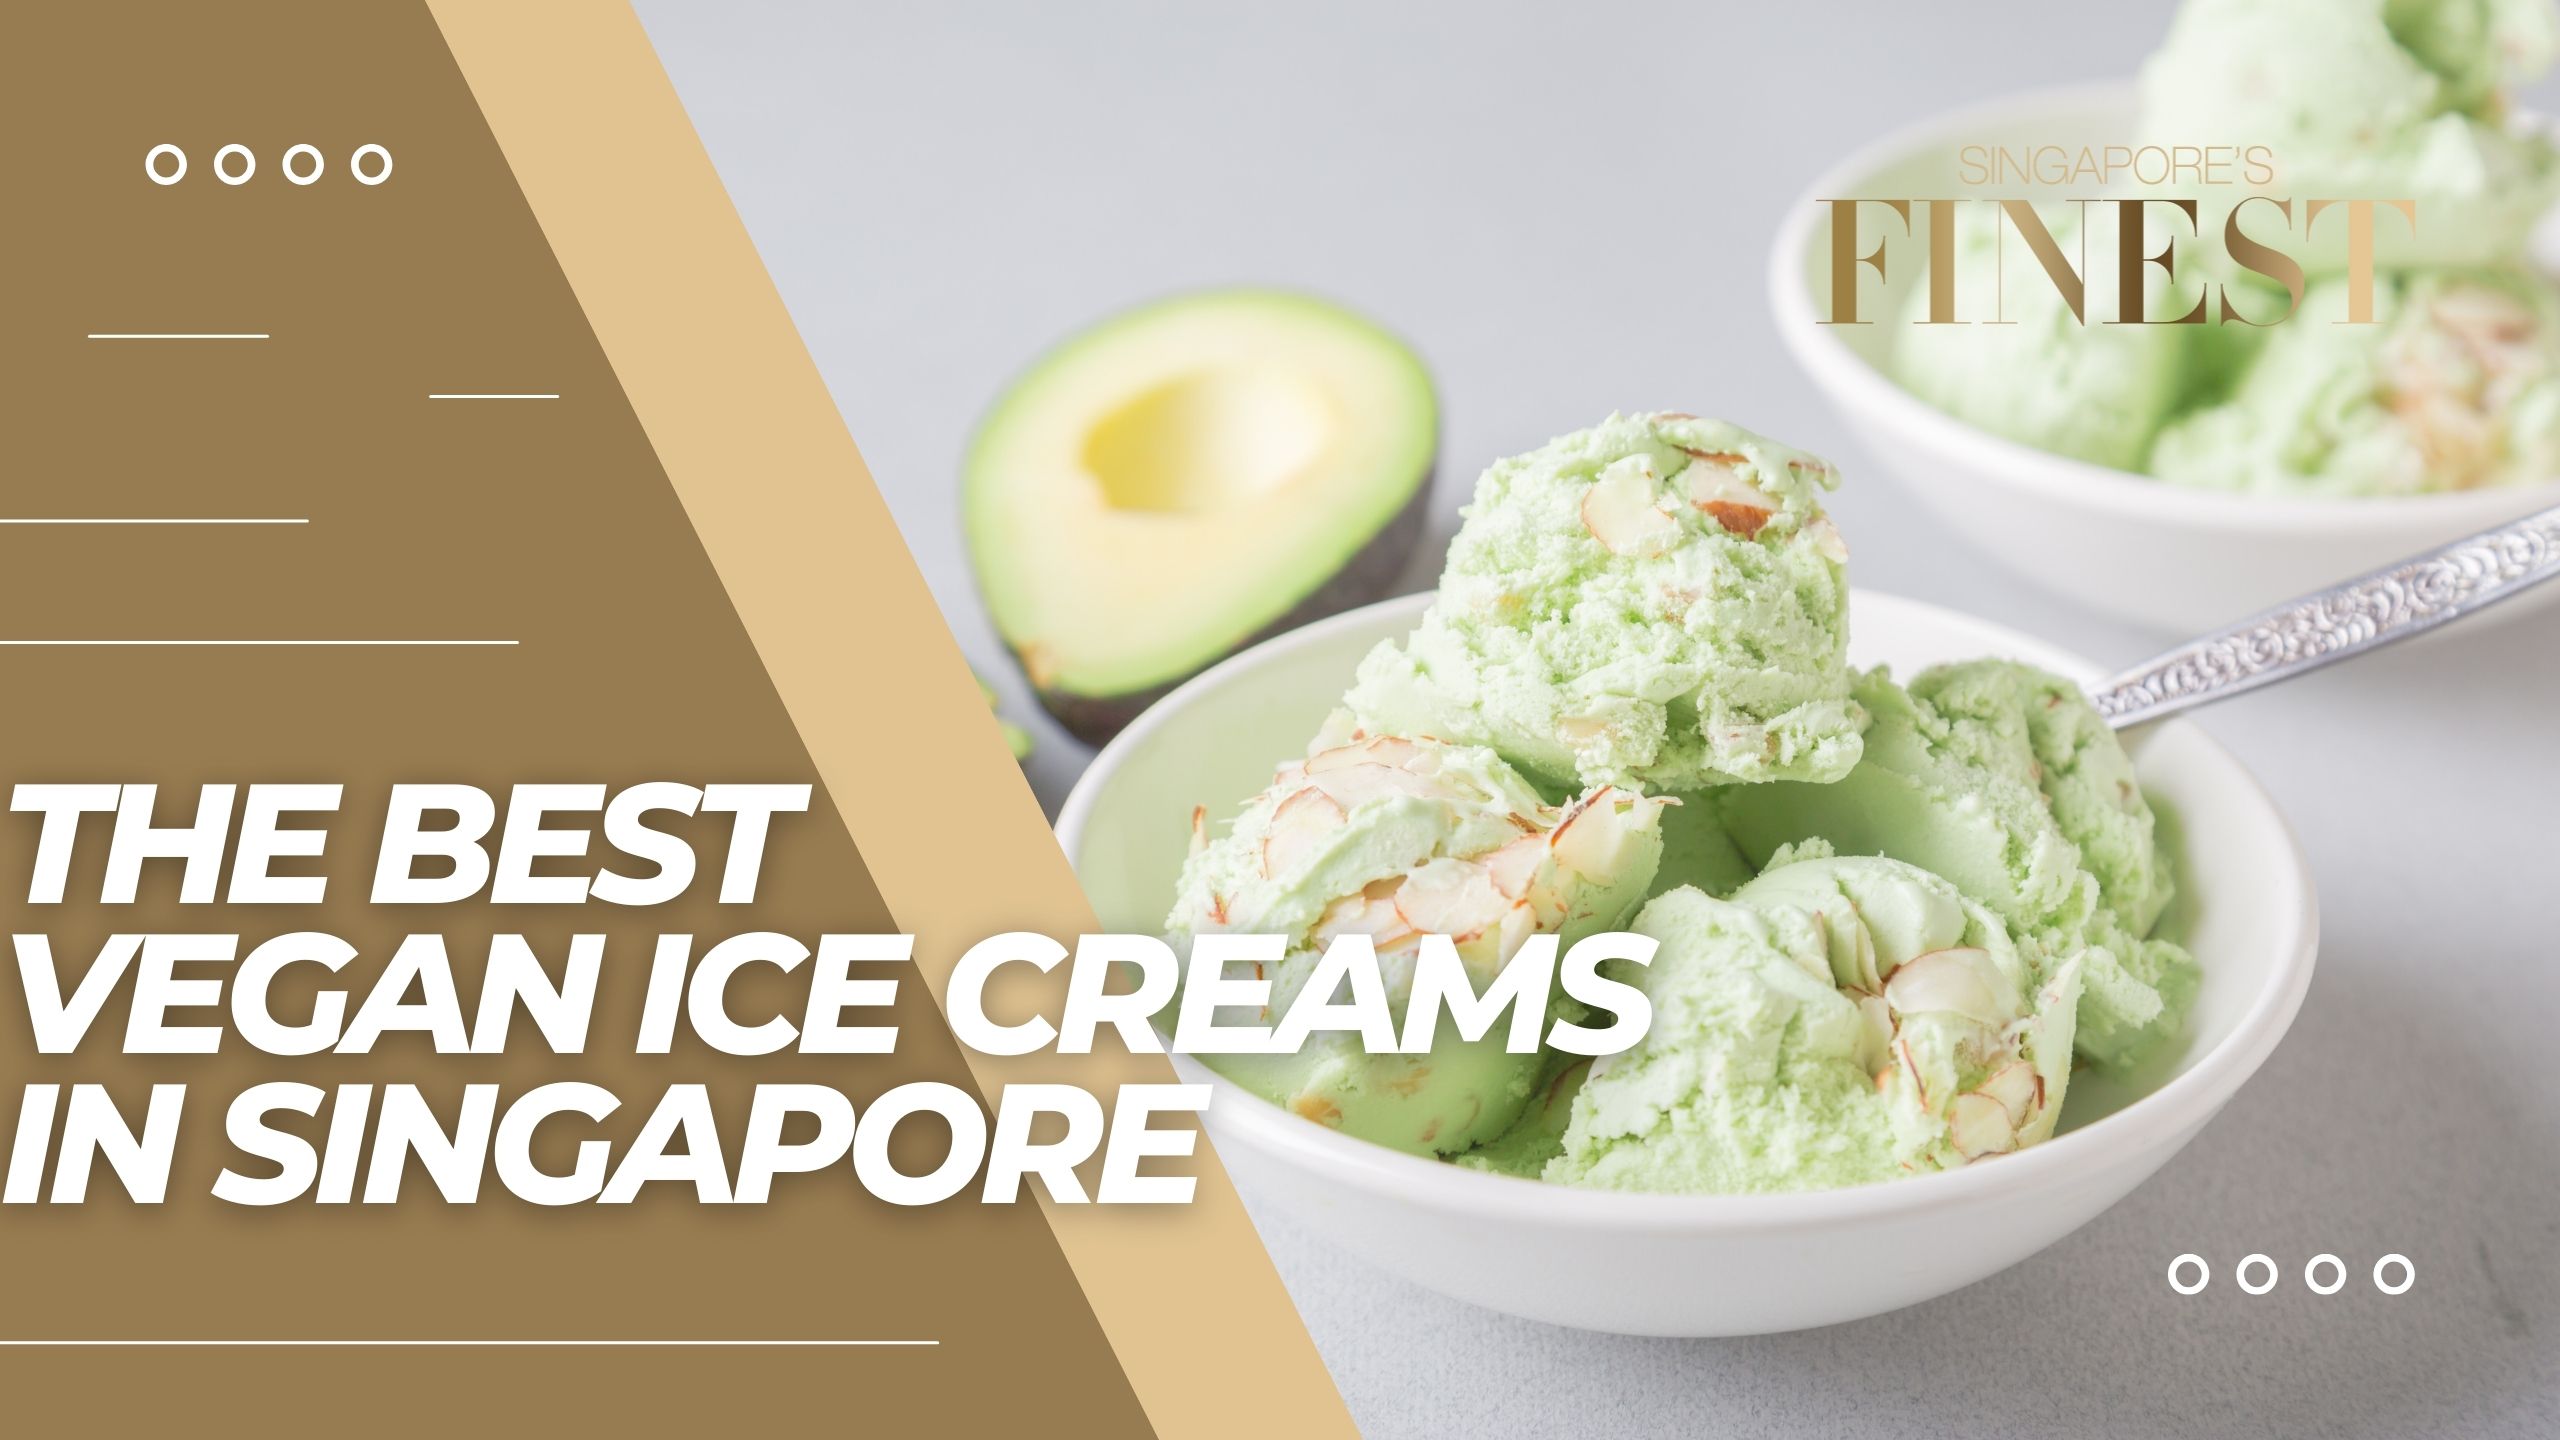 The Finest Vegan Ice Creams in Singapore